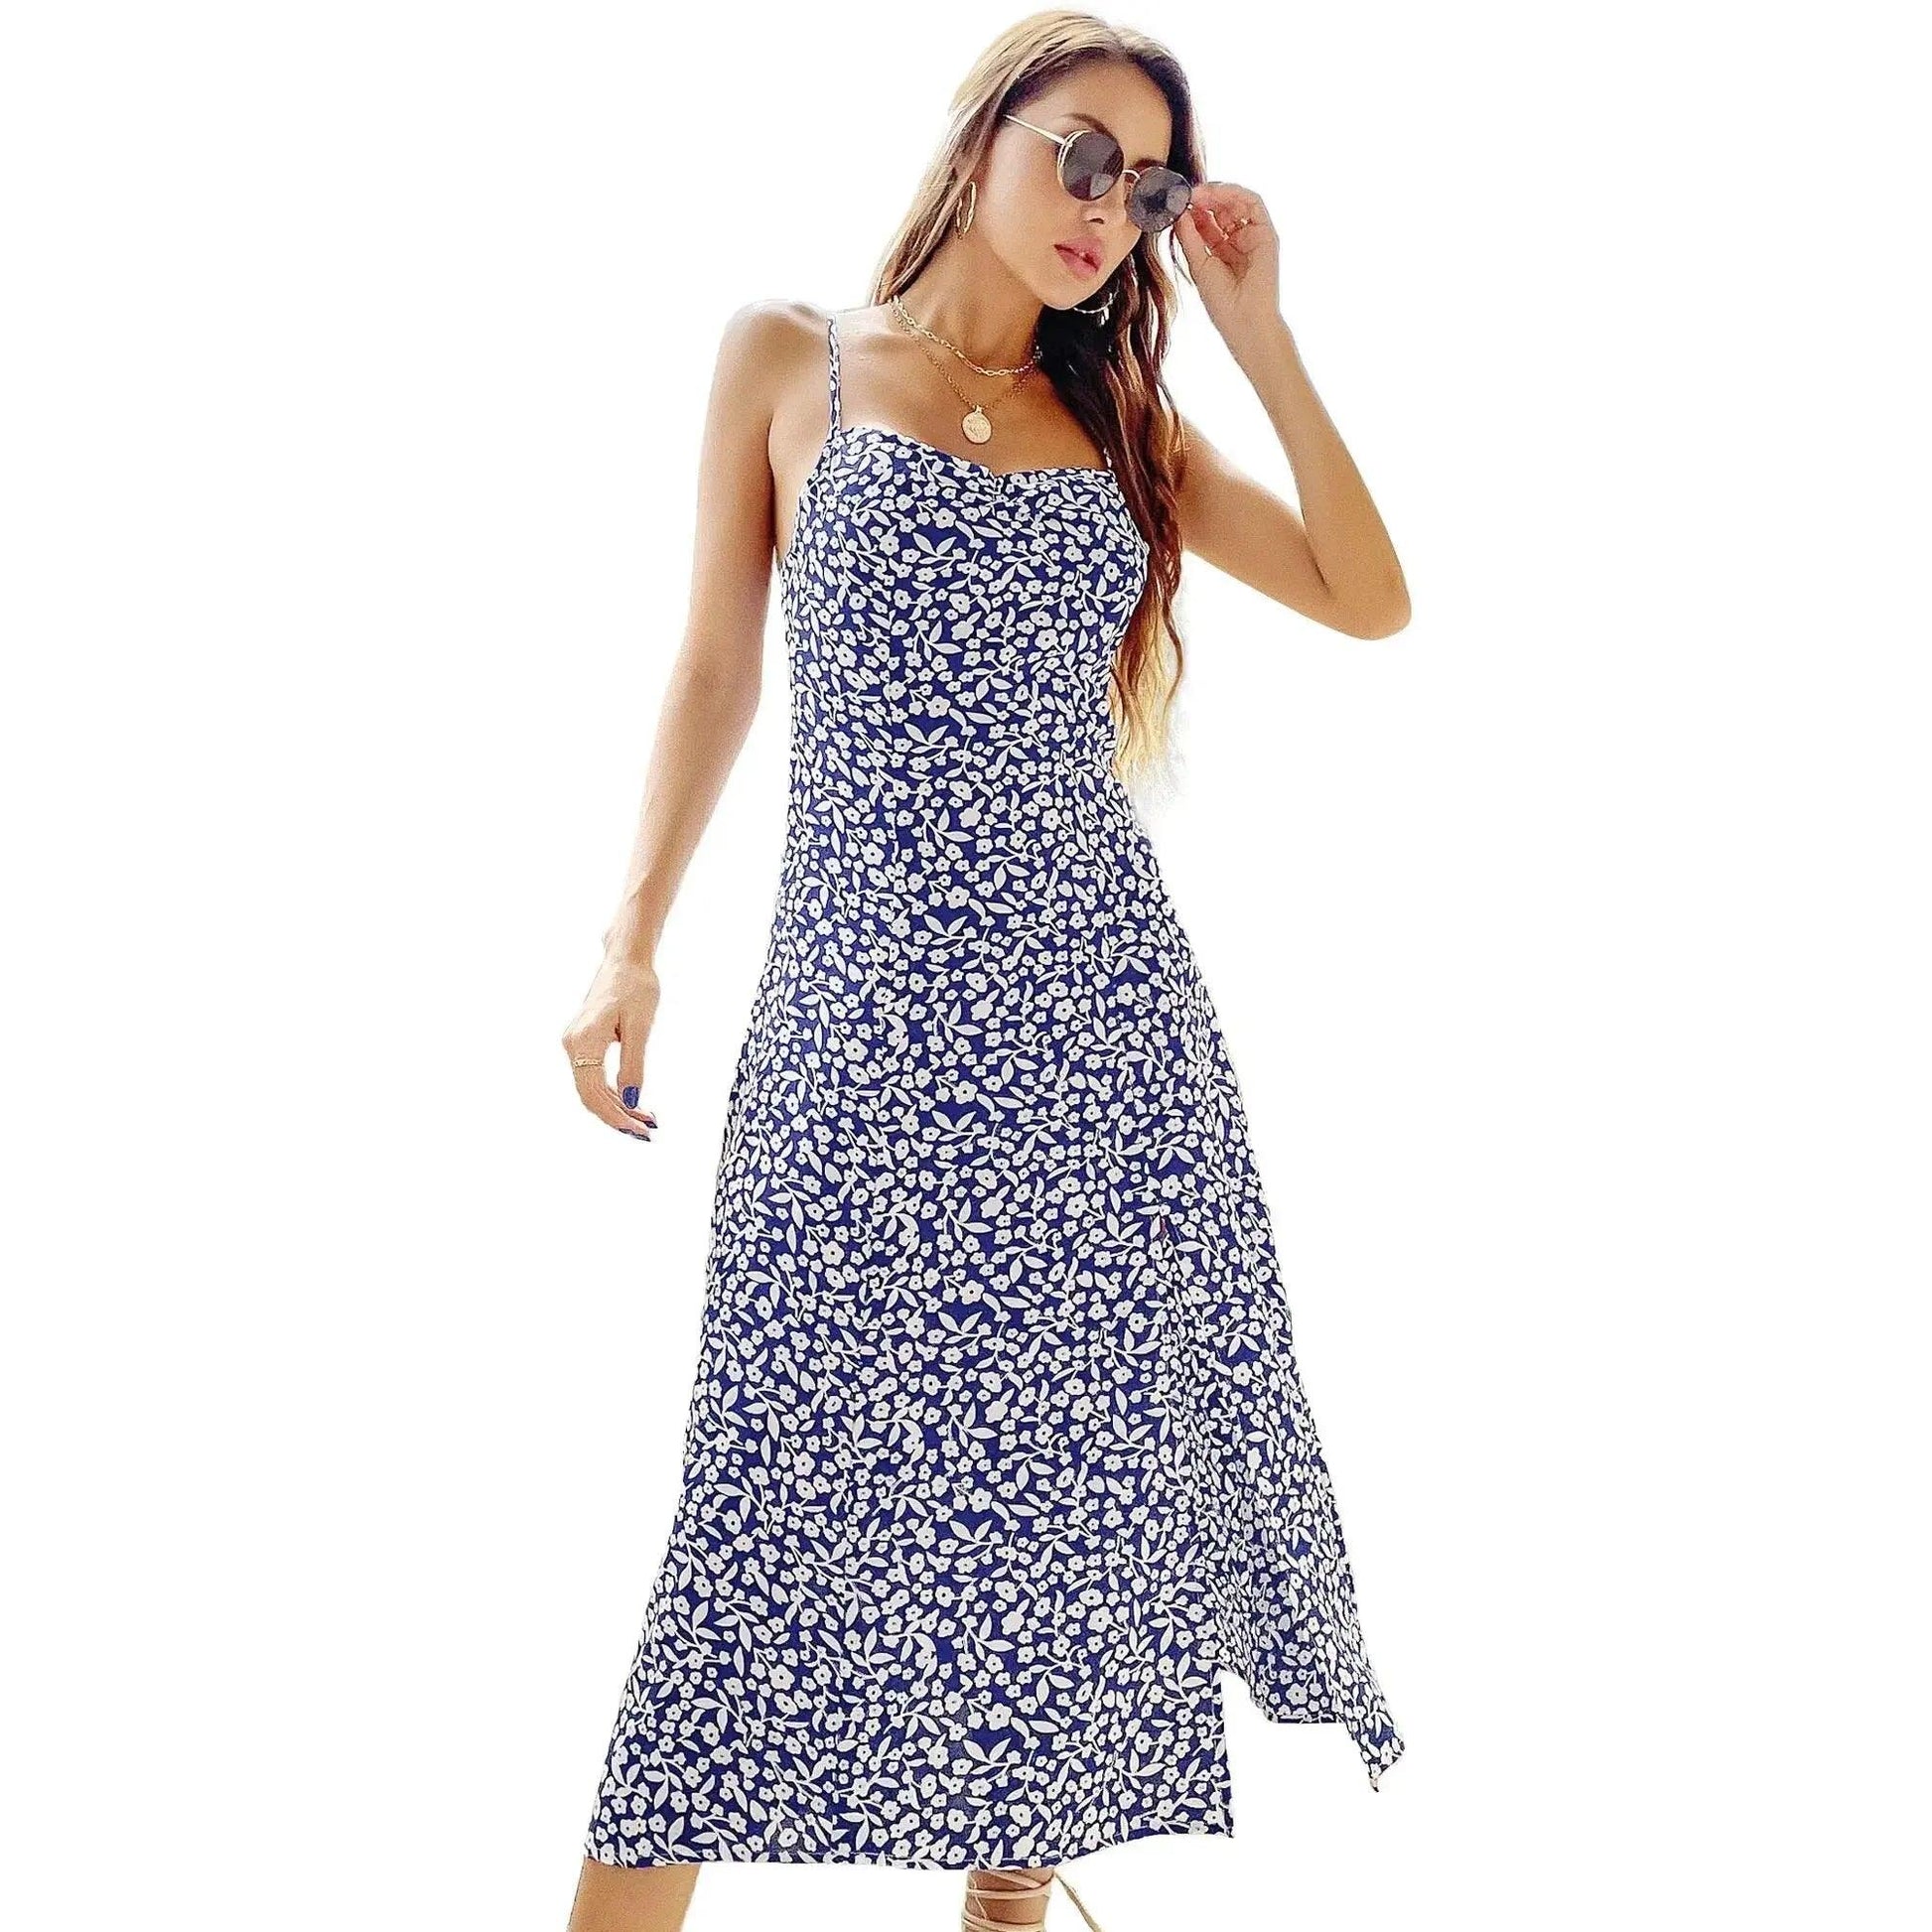 Chic Summer Spaghetti Strap Floral Midi Dress - Sleeveless, Slim Fit with Slit Design - MissyMays Elegance